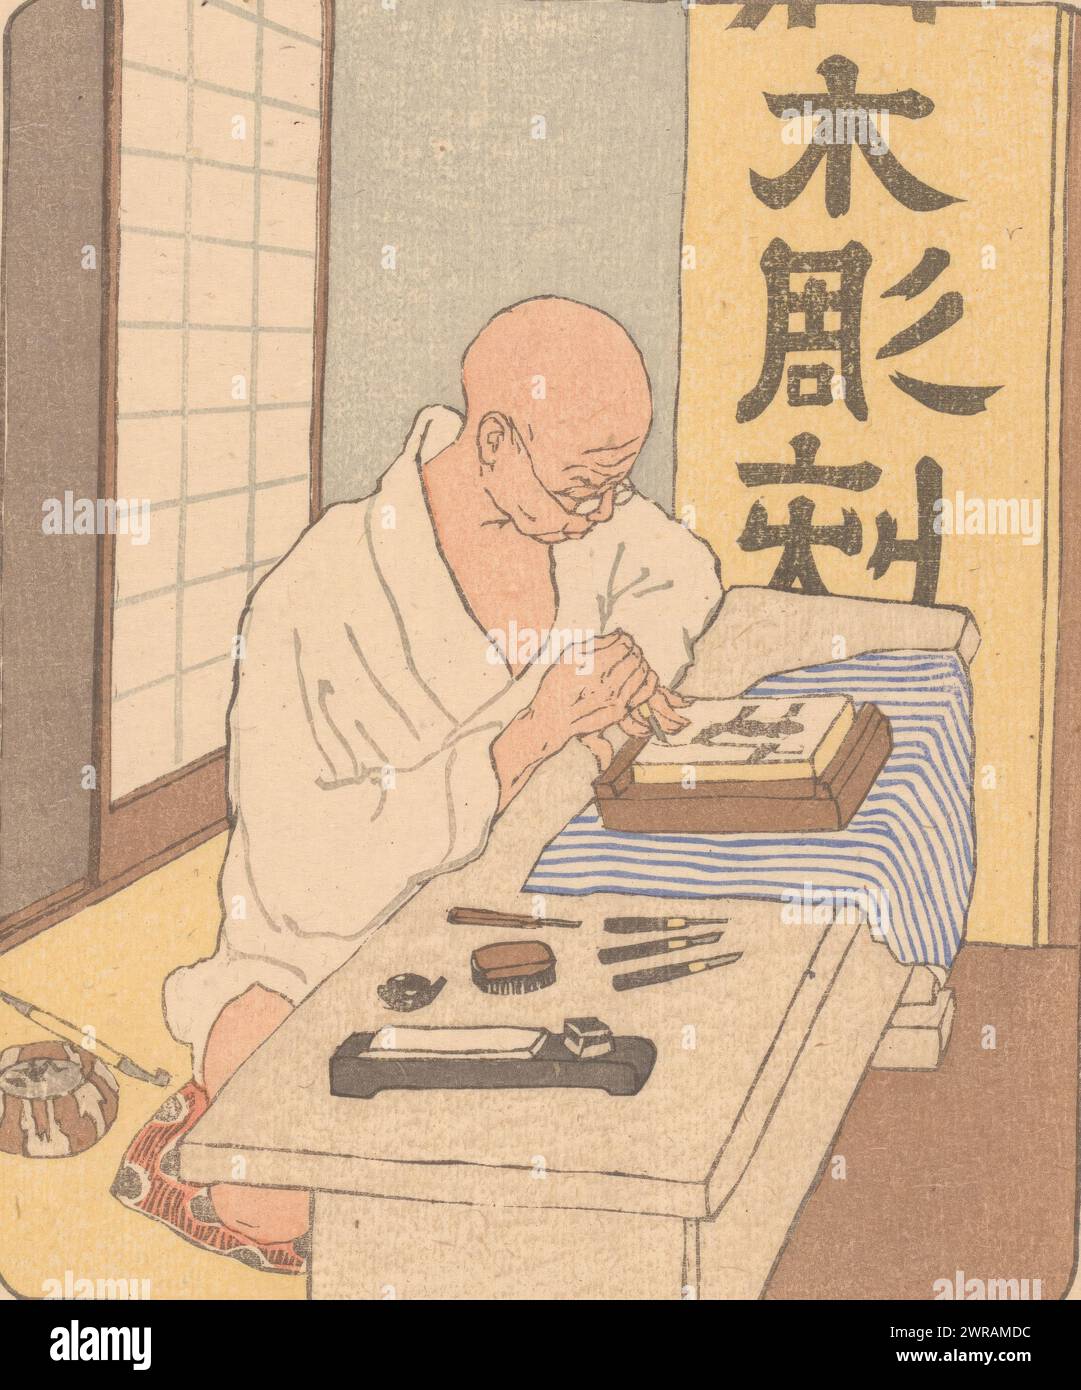 Japanese woodcarver, print maker: Emil Orlik, 1900 - 1903, paper, color woodcut, height 217 mm × width 197 mm, print Stock Photo